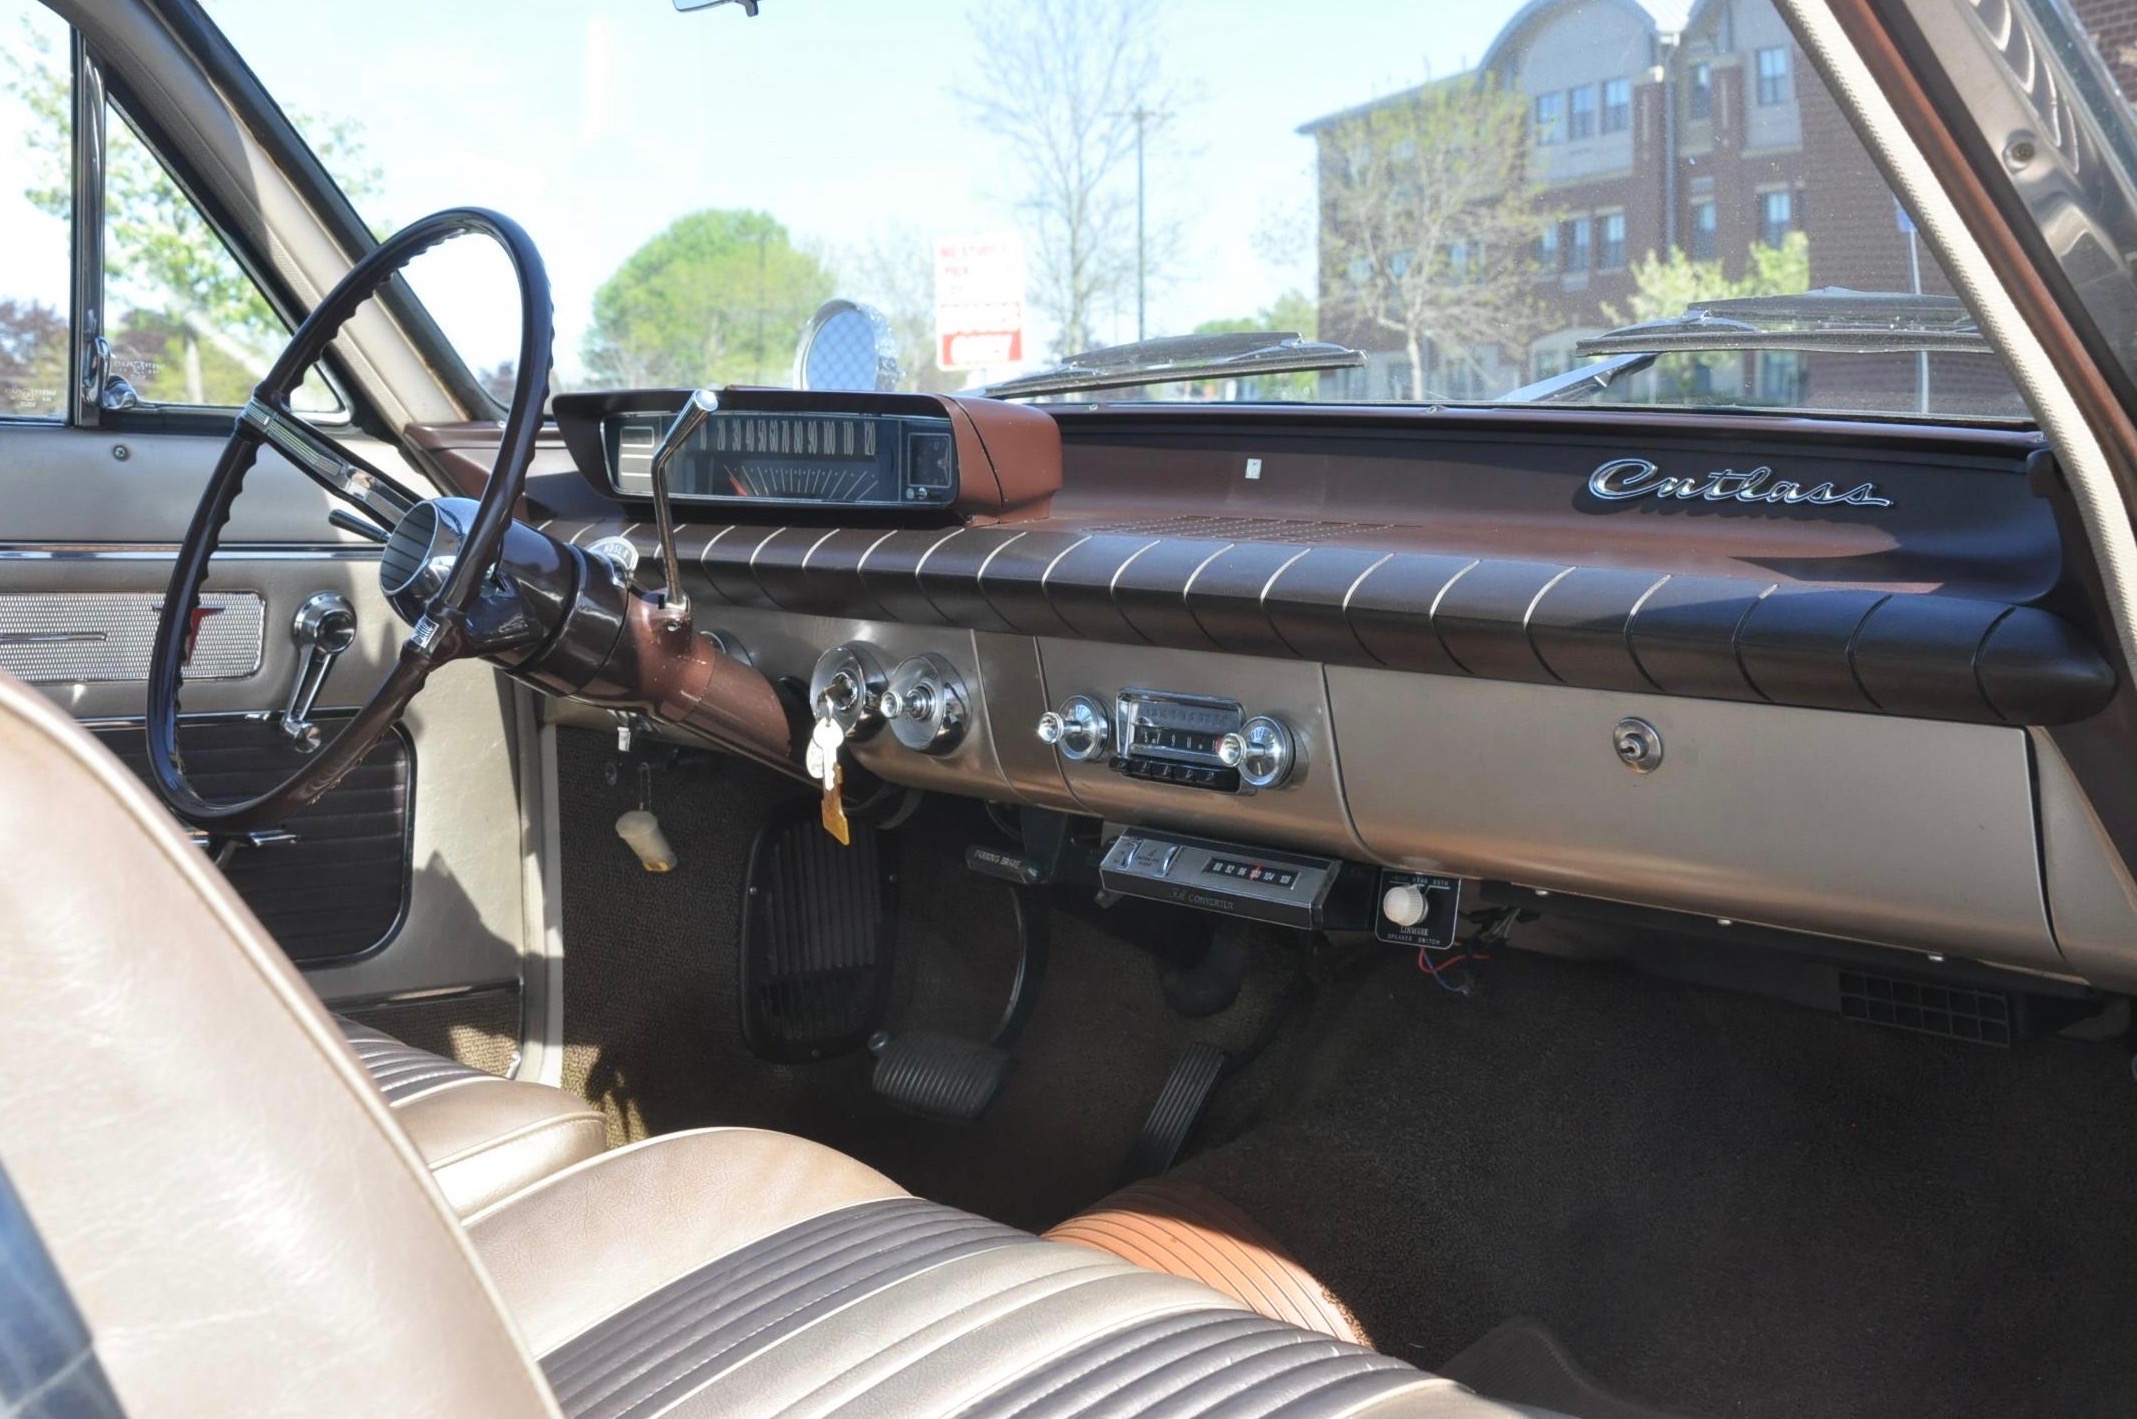 1961 Olds Cutlass, Oldsmobile Cutlass started as a compact car, ClassicCars.com Journal